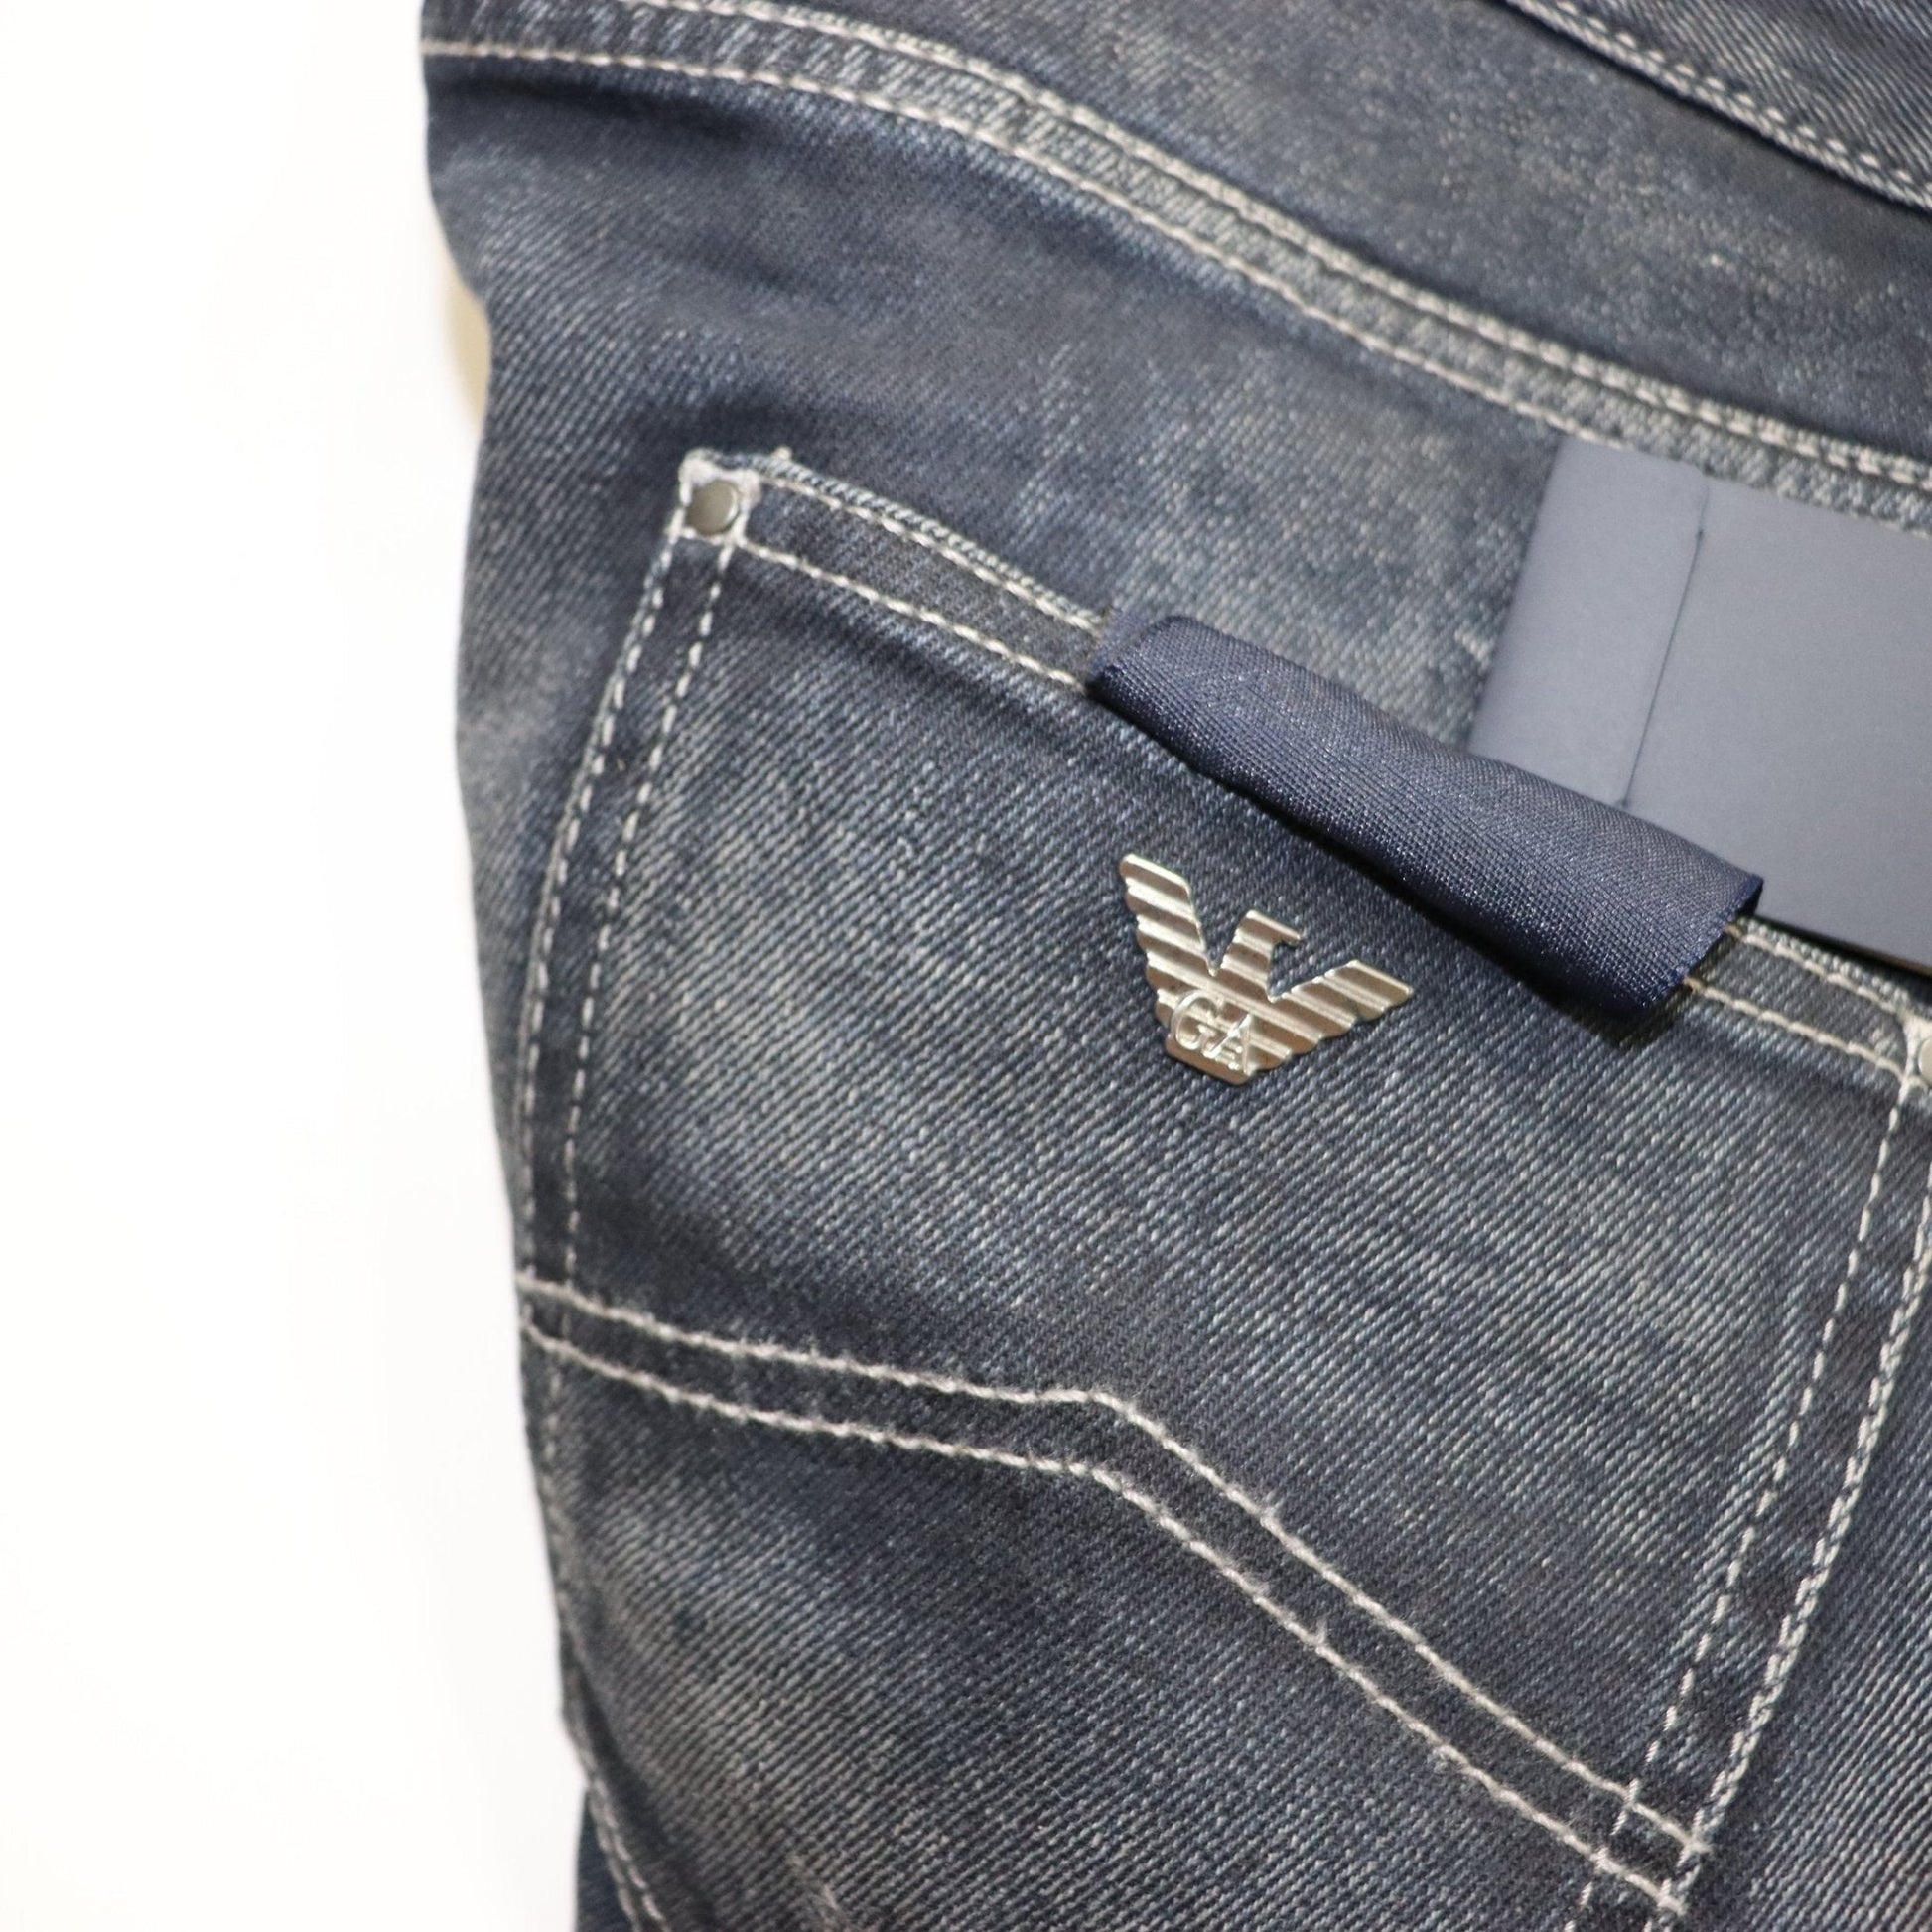 Armani Jeans J20 Extra Slim Fit Dark Jeans - LinkFashionco